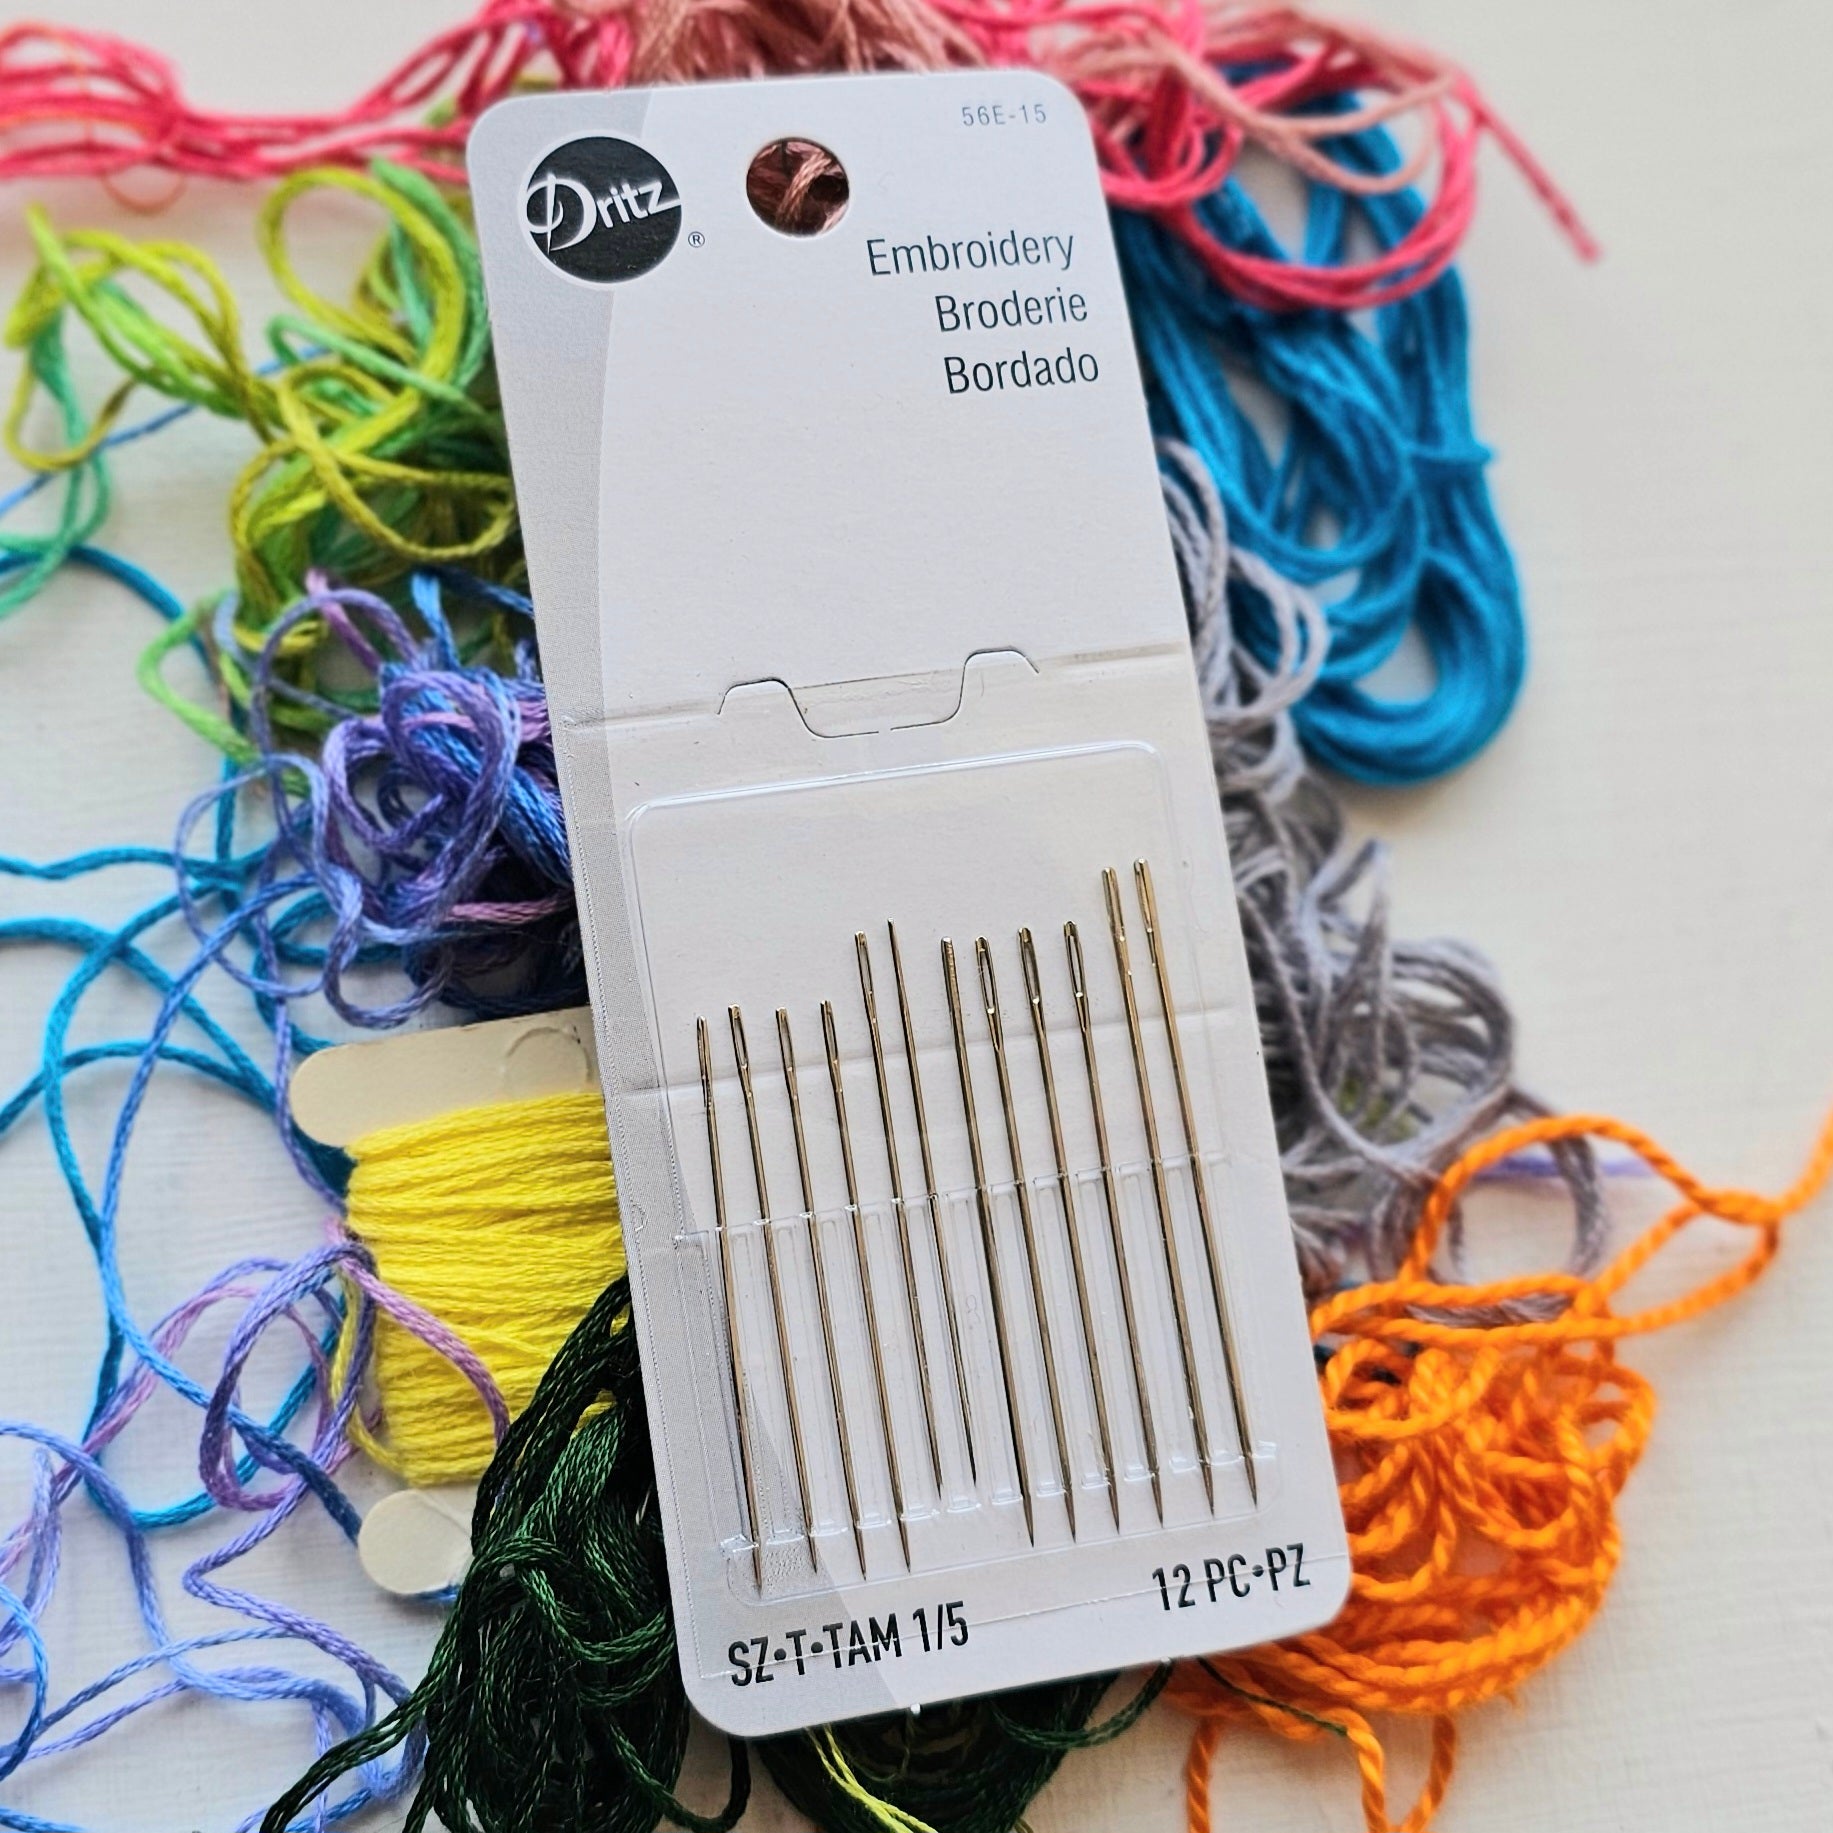 Dritz Hand Embroidery Needles